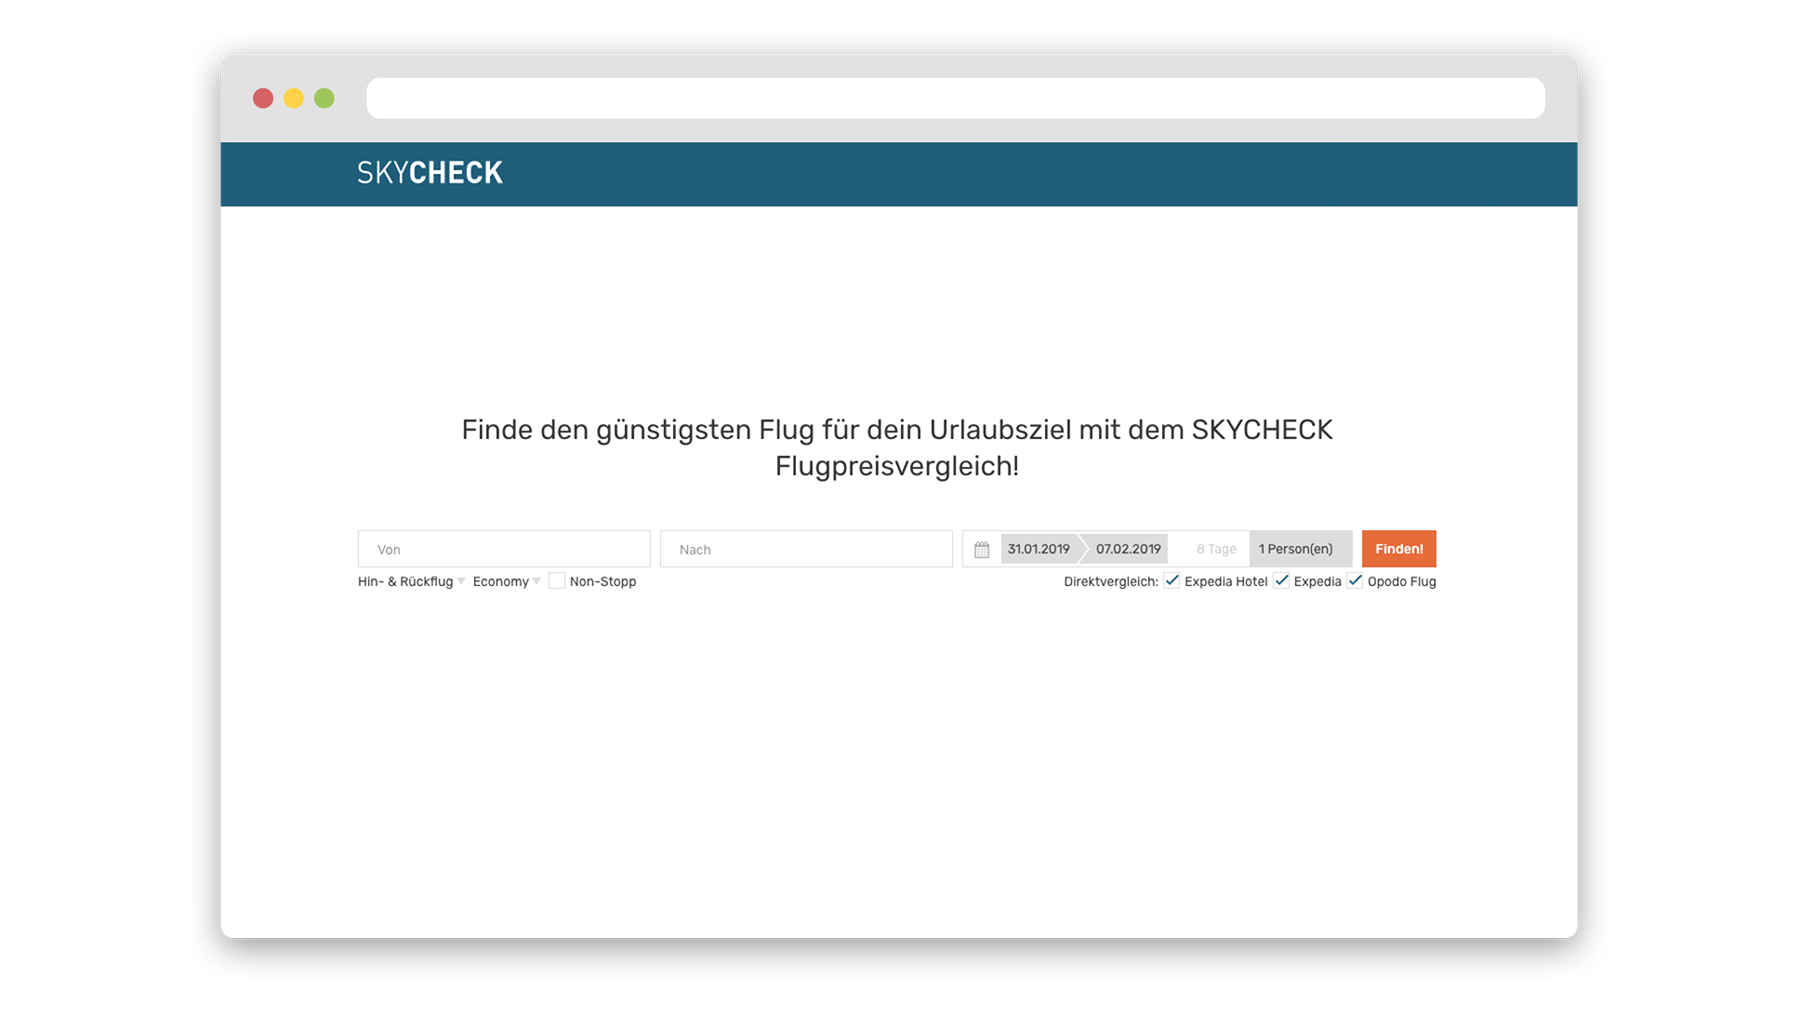 screenshot of the skycheck flight search website